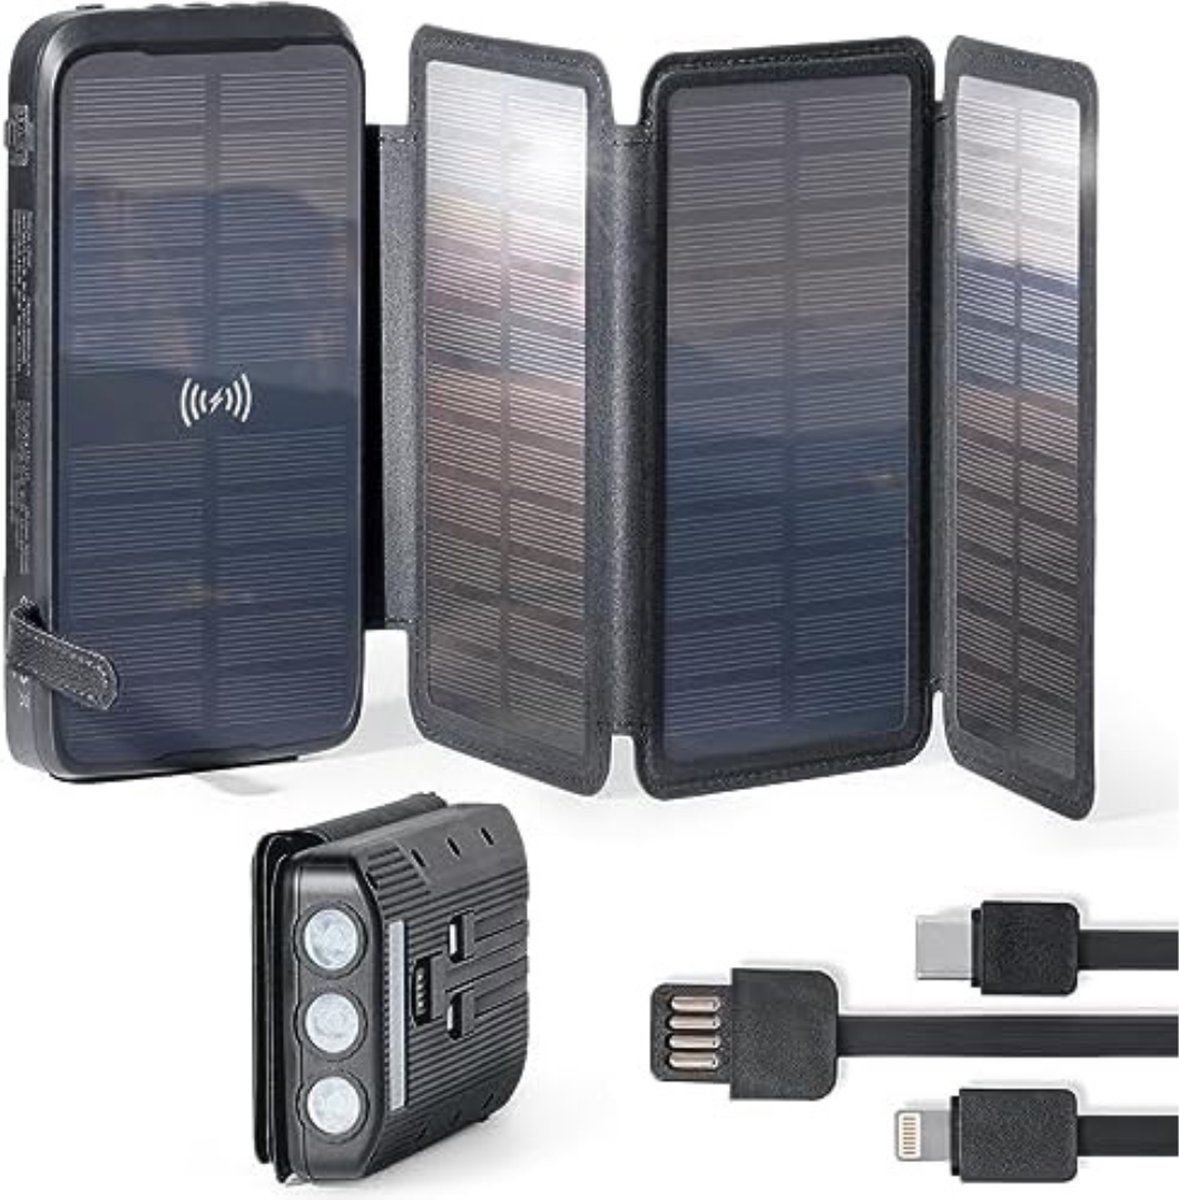 Velox Solar charger - Solar panel - Solar oplader - Solar charger zonnepaneel - Solar charger powerbank - 20000mAh